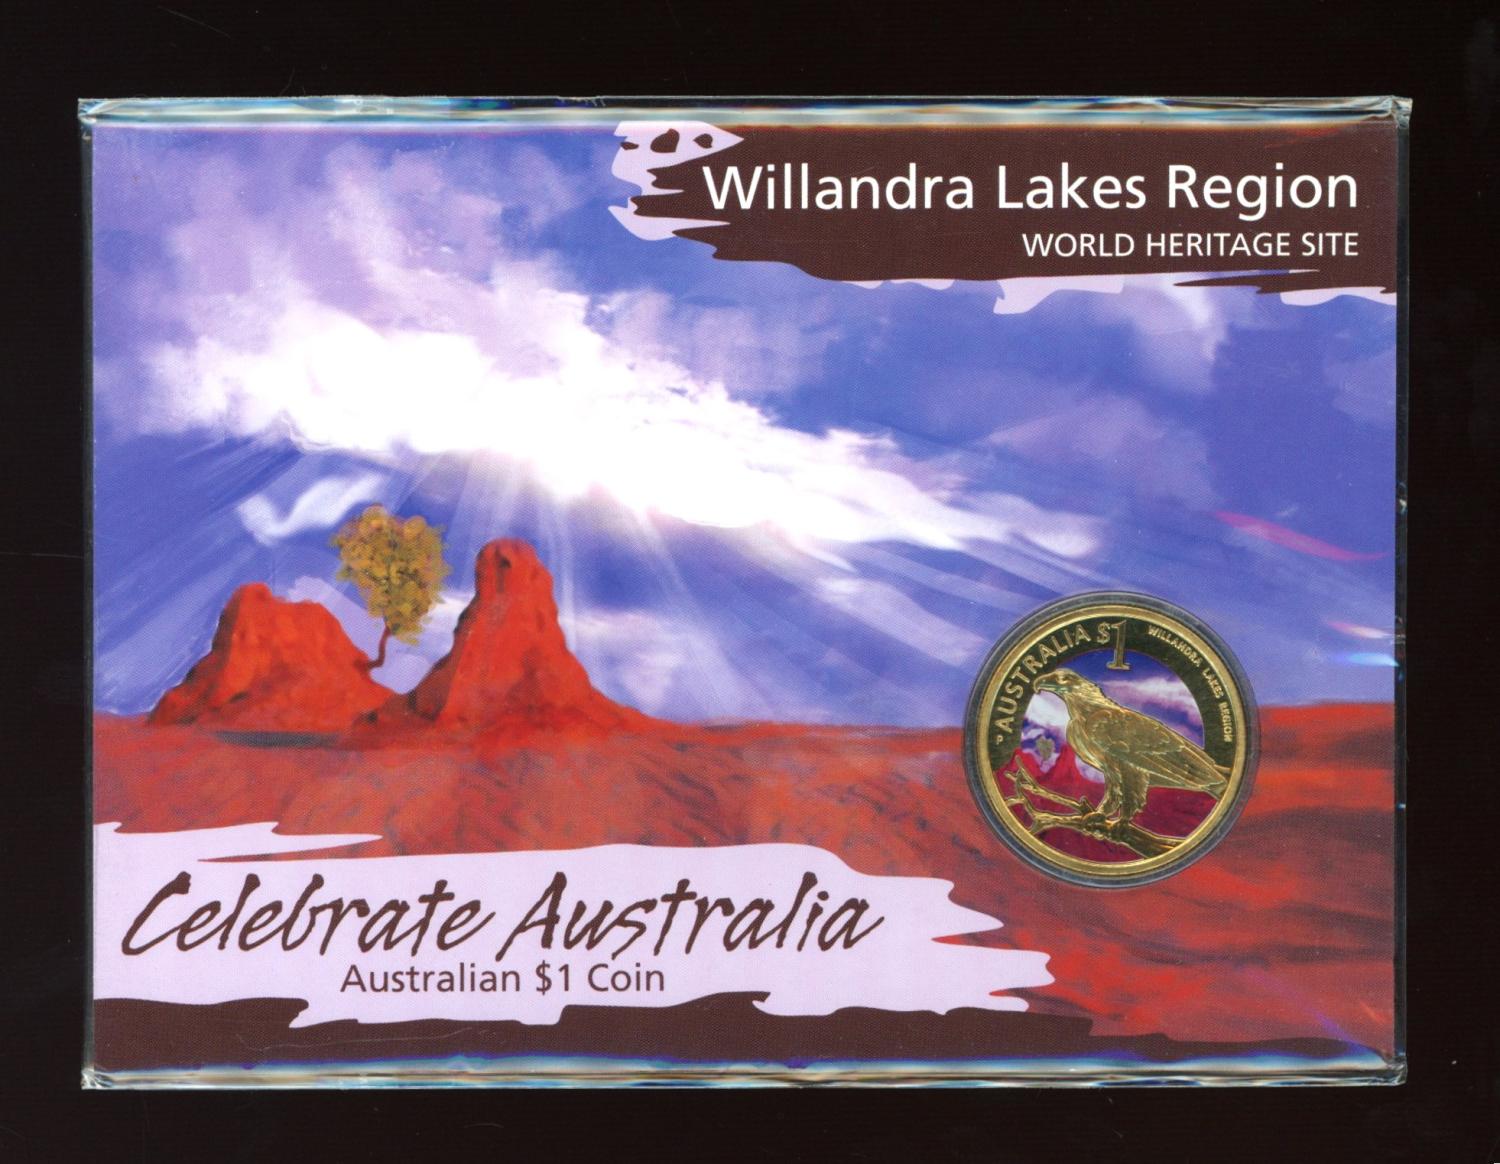 Thumbnail for 2012 Celebrate Australia Coloured Uncirculated $1 -Willandra Lakes Region